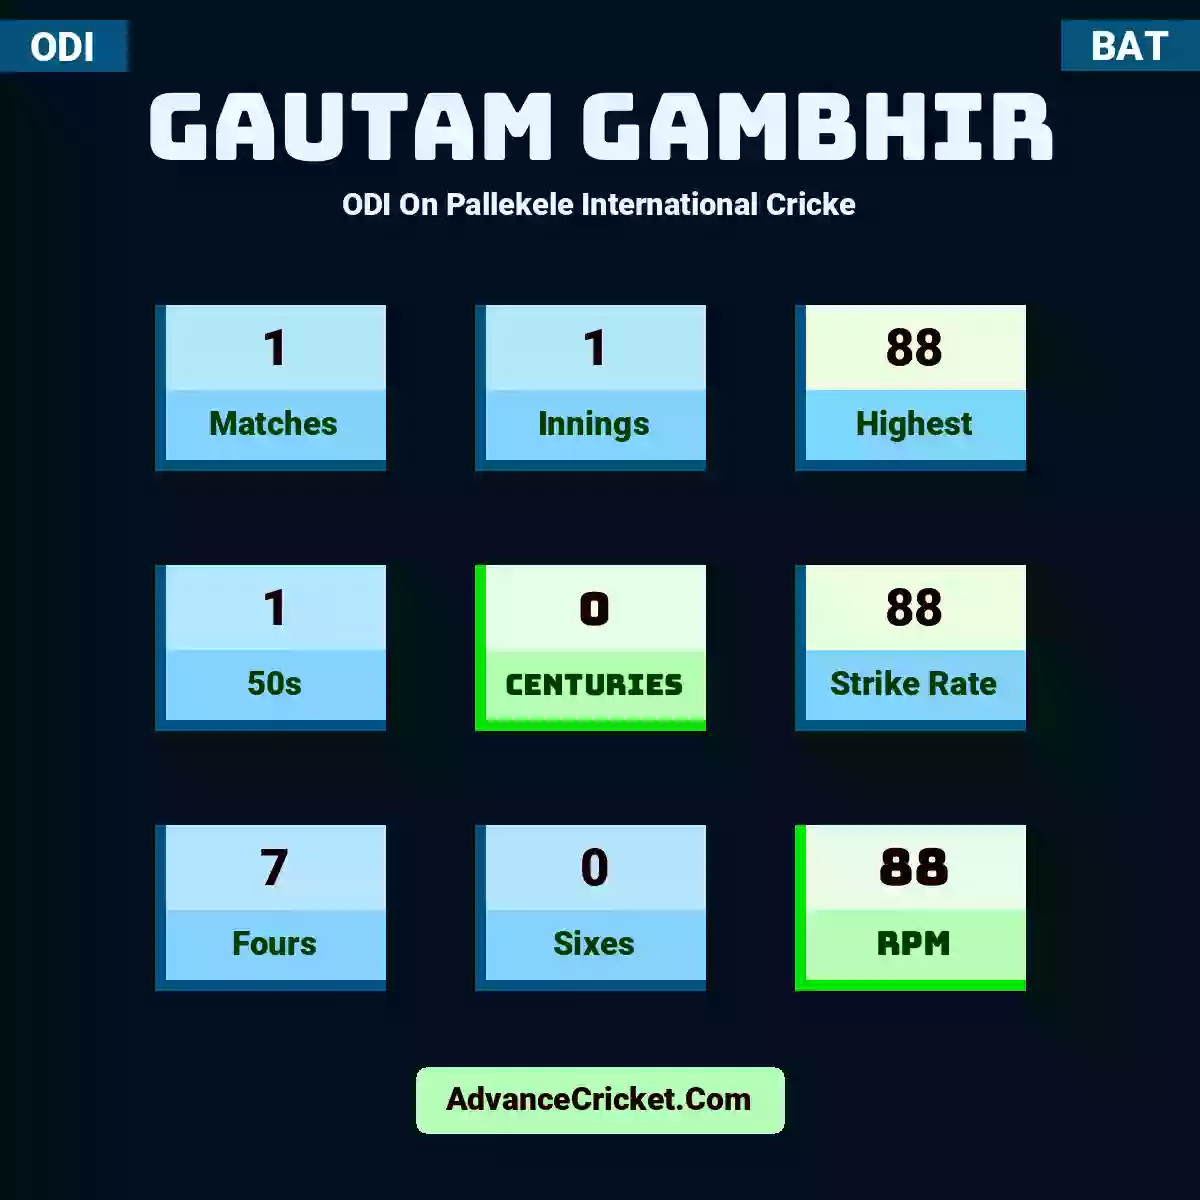 Gautam Gambhir ODI  On Pallekele International Cricke, Gautam Gambhir played 1 matches, scored 88 runs as highest, 1 half-centuries, and 0 centuries, with a strike rate of 88. G.Gambhir hit 7 fours and 0 sixes, with an RPM of 88.